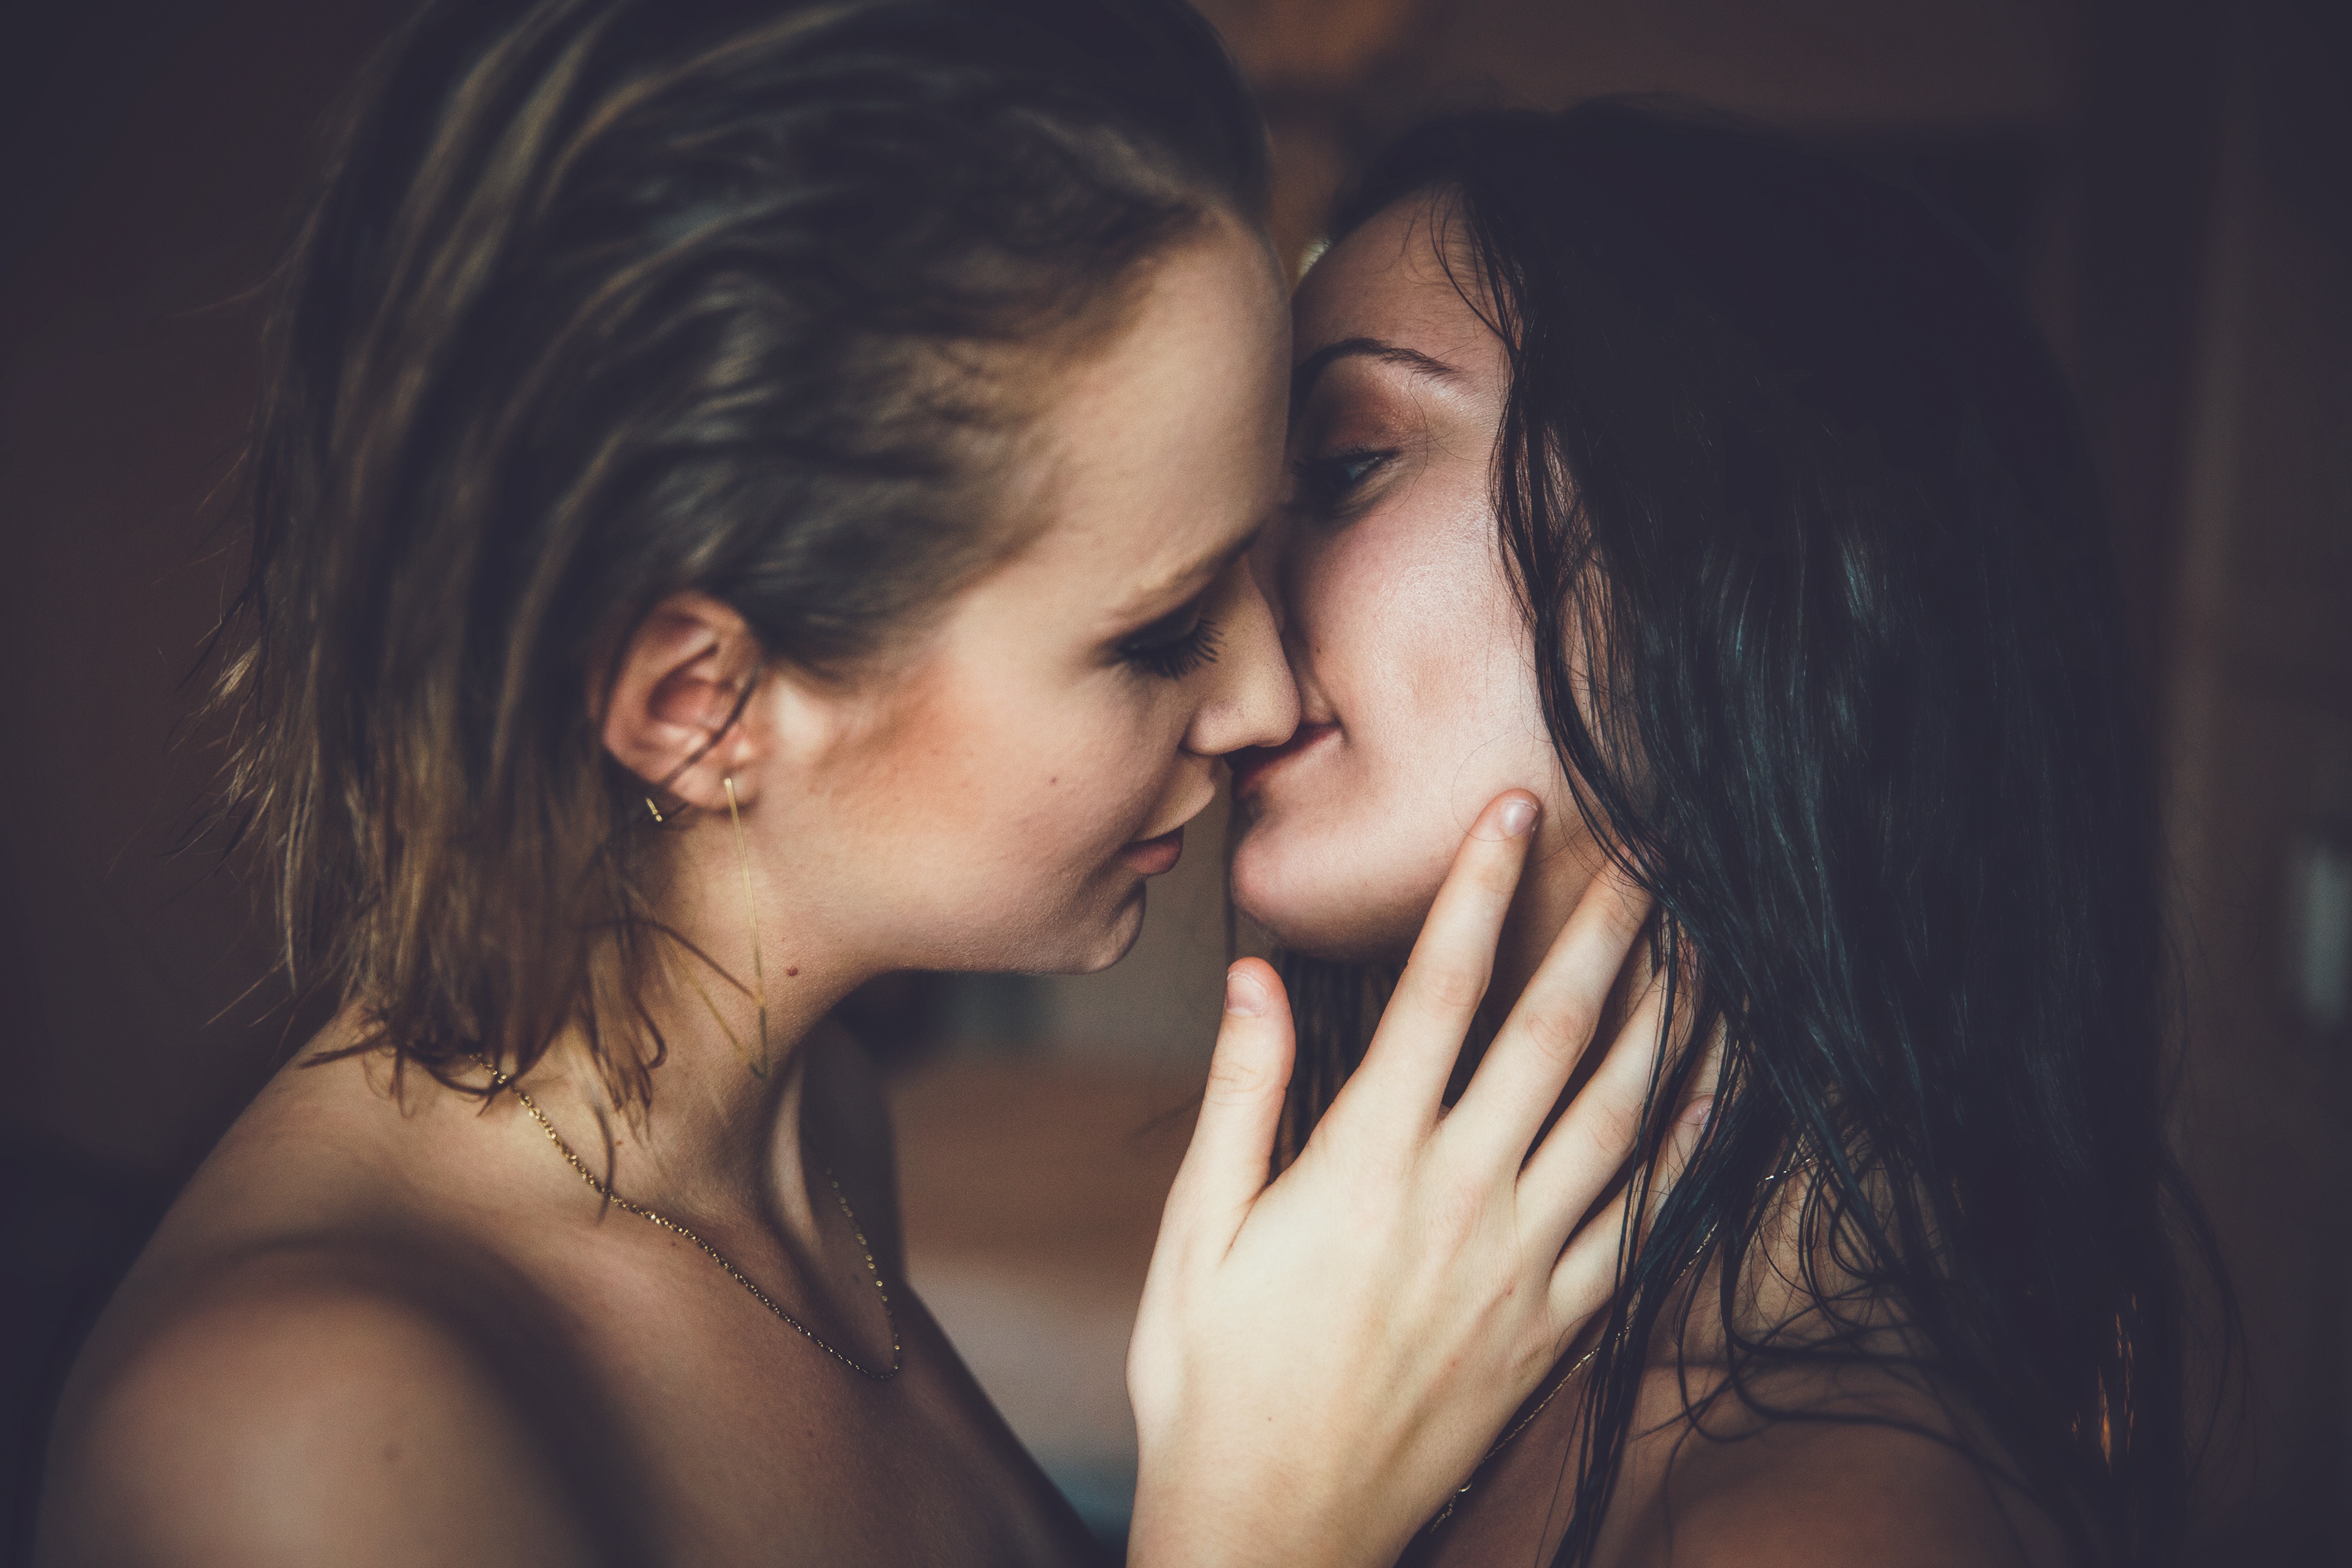 Lesbian could. Барбара Палвин лесбийский поцелуй. Две девушки любовь. Поцелуй девушек. Фотосессия двух девушек.